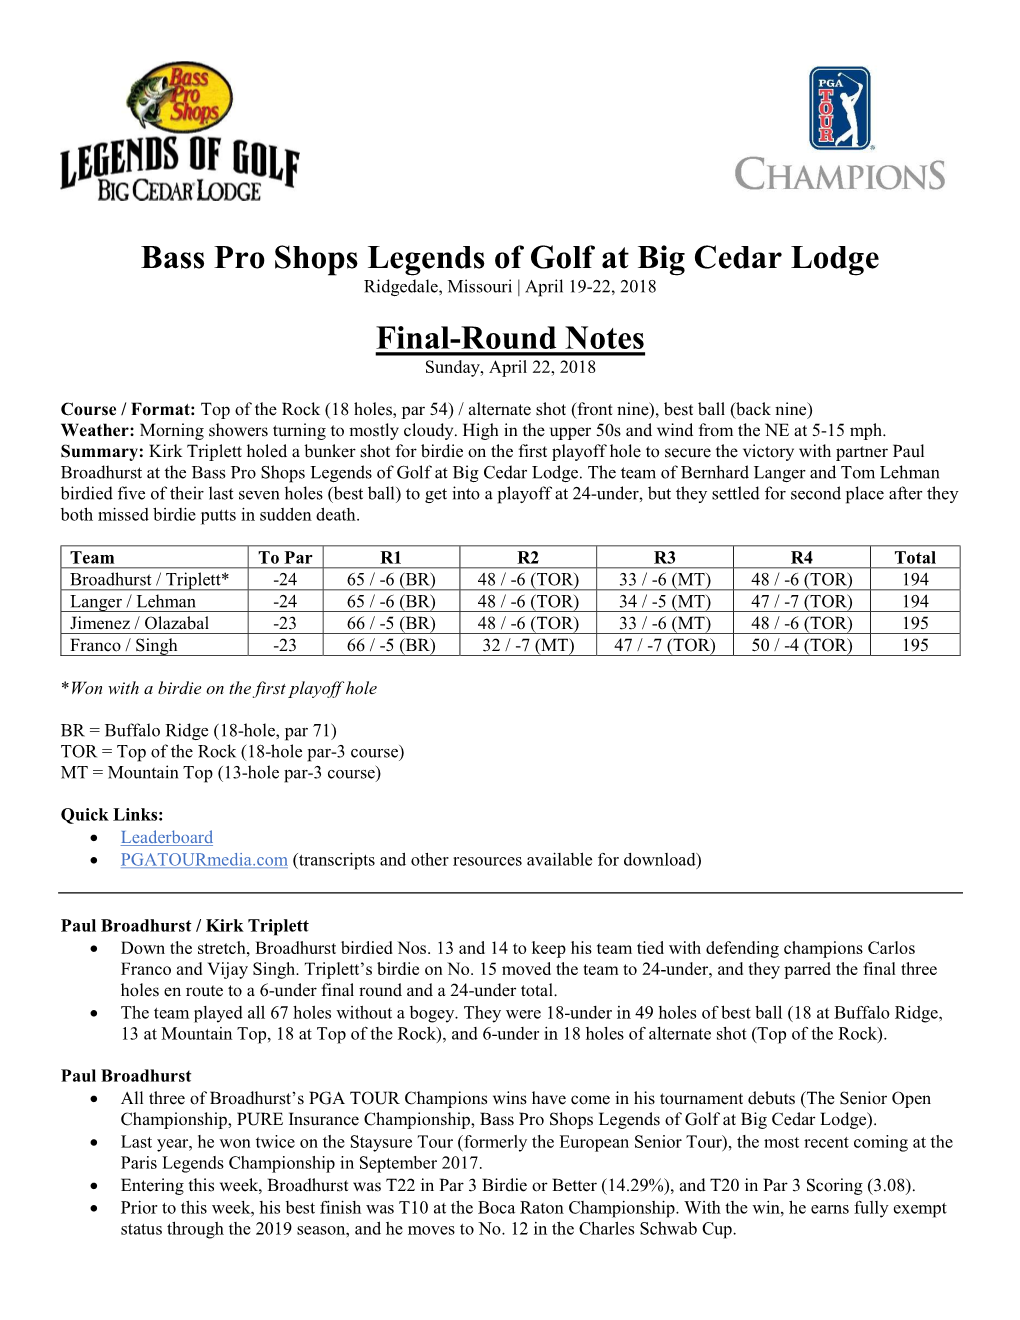 Bass Pro Shops Legends of Golf at Big Cedar Lodge Final-Round Notes